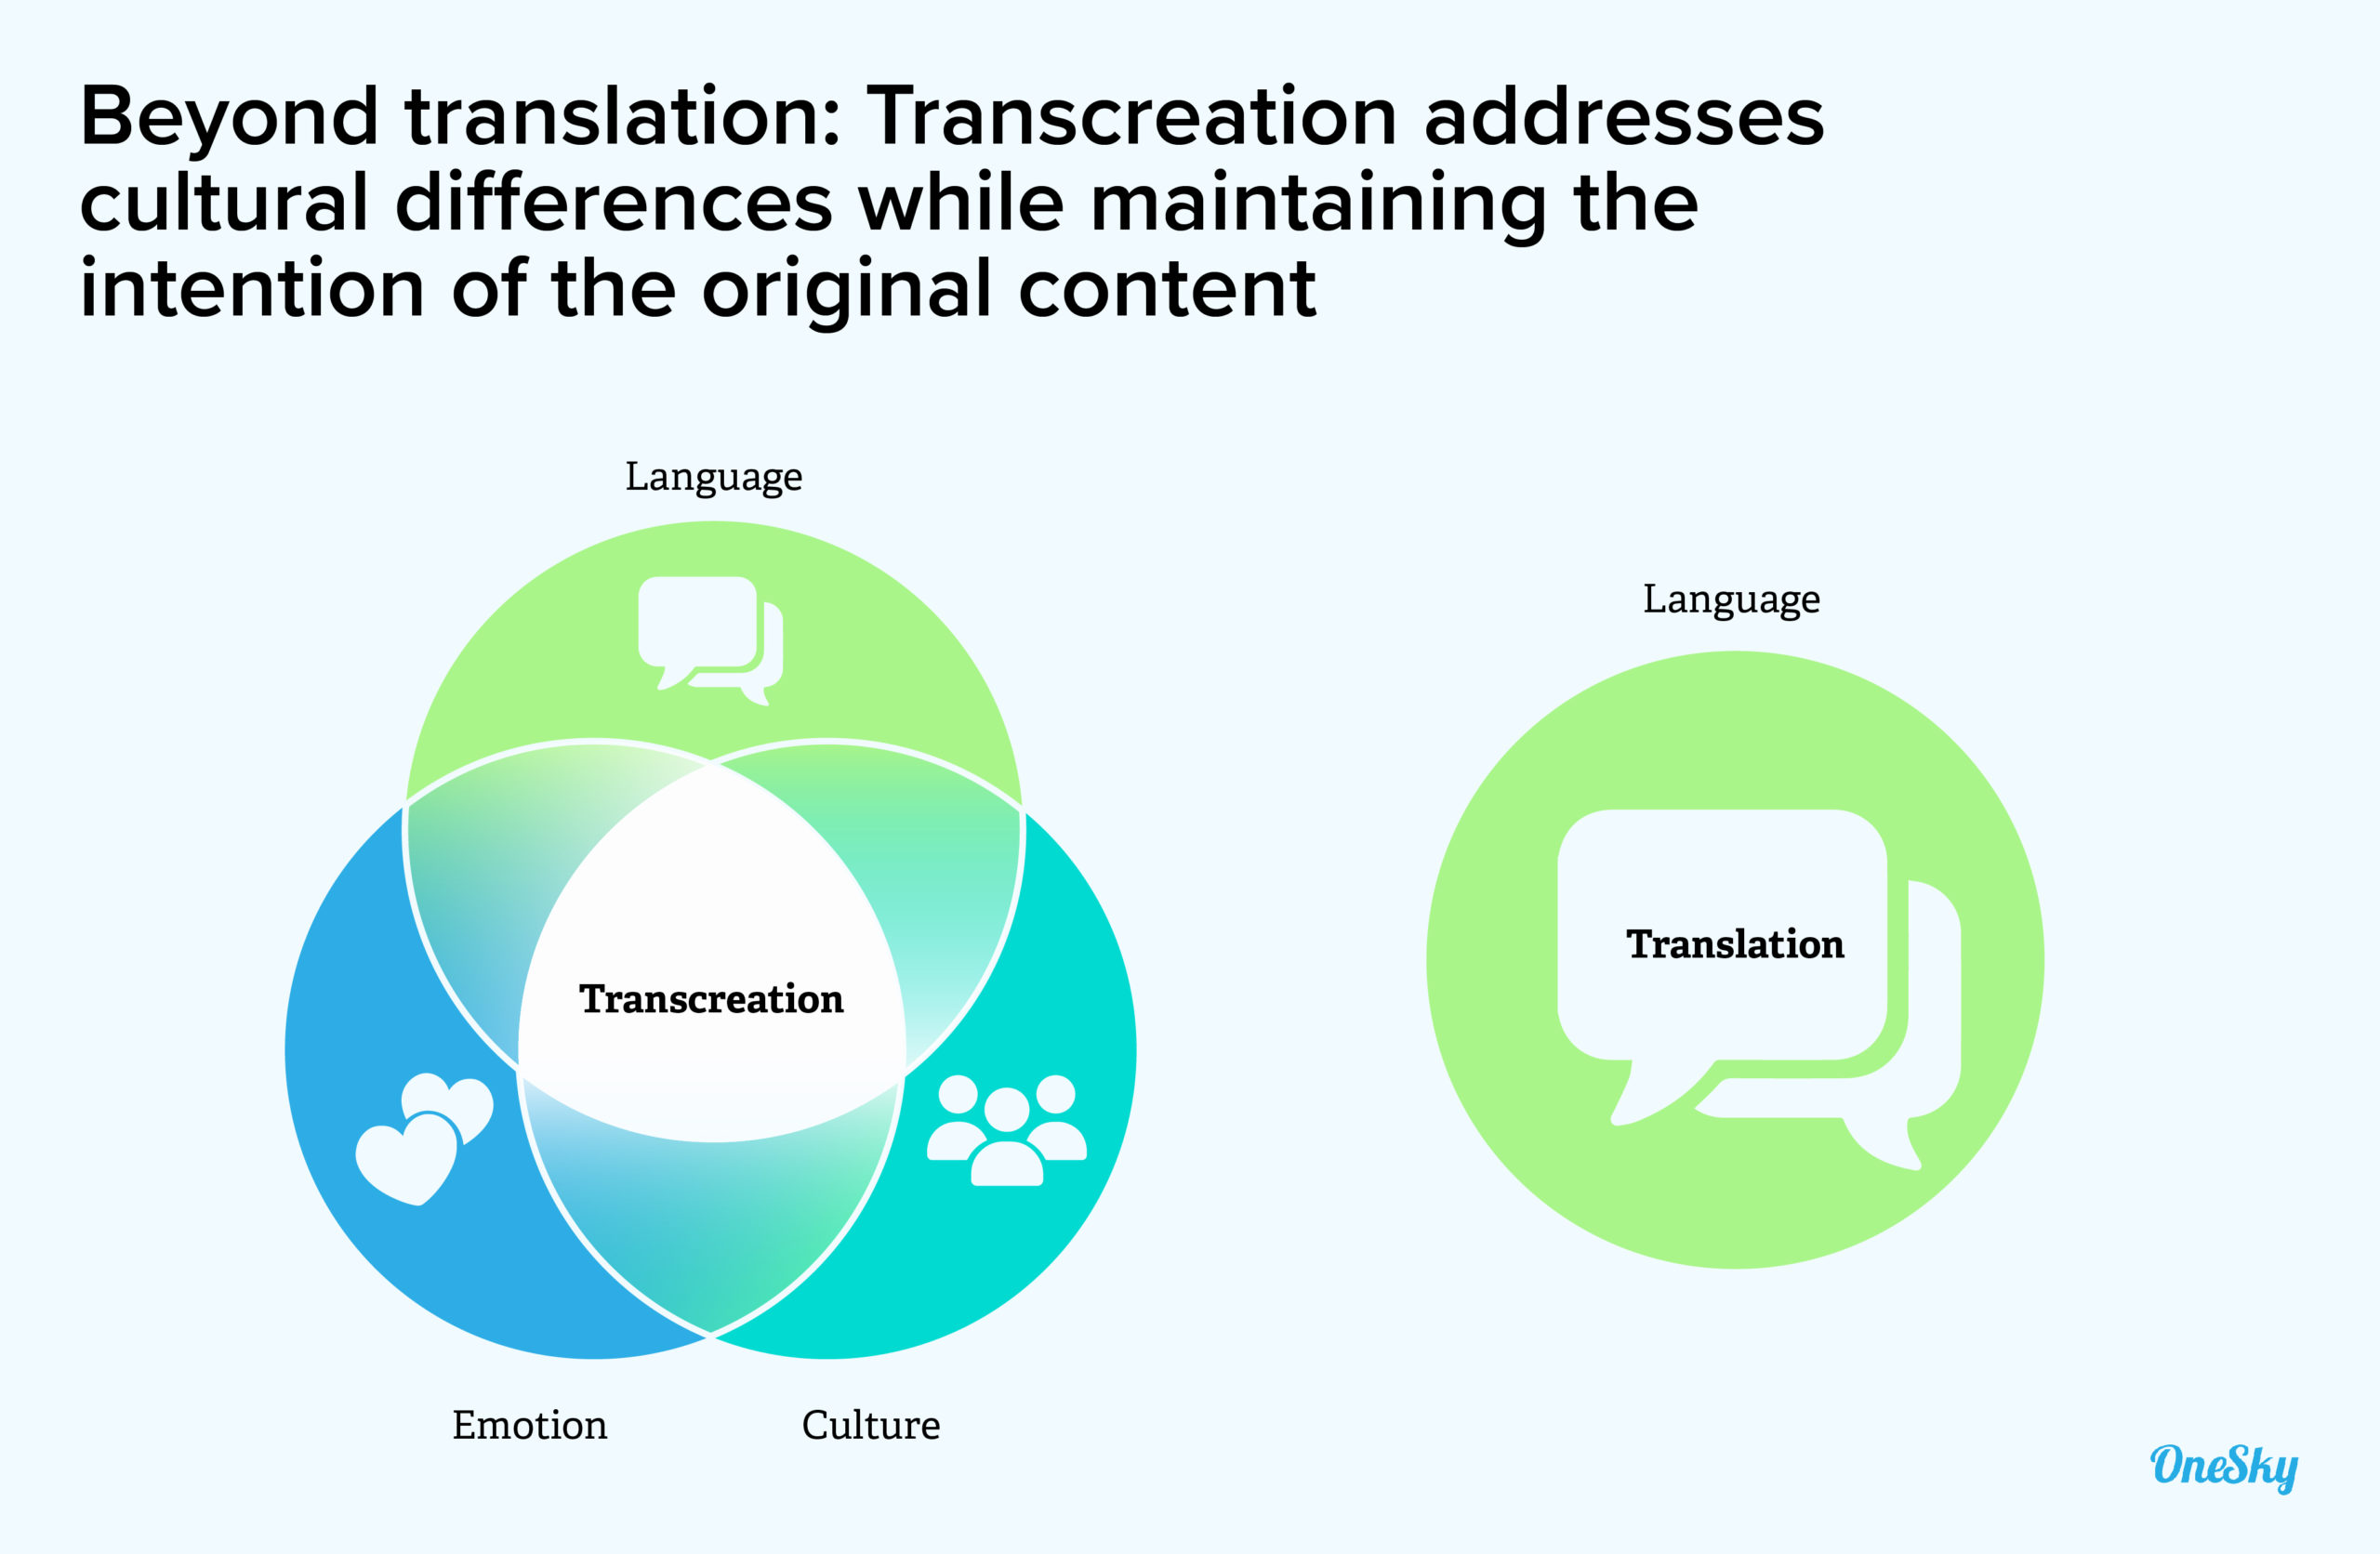 transcreation vs translation